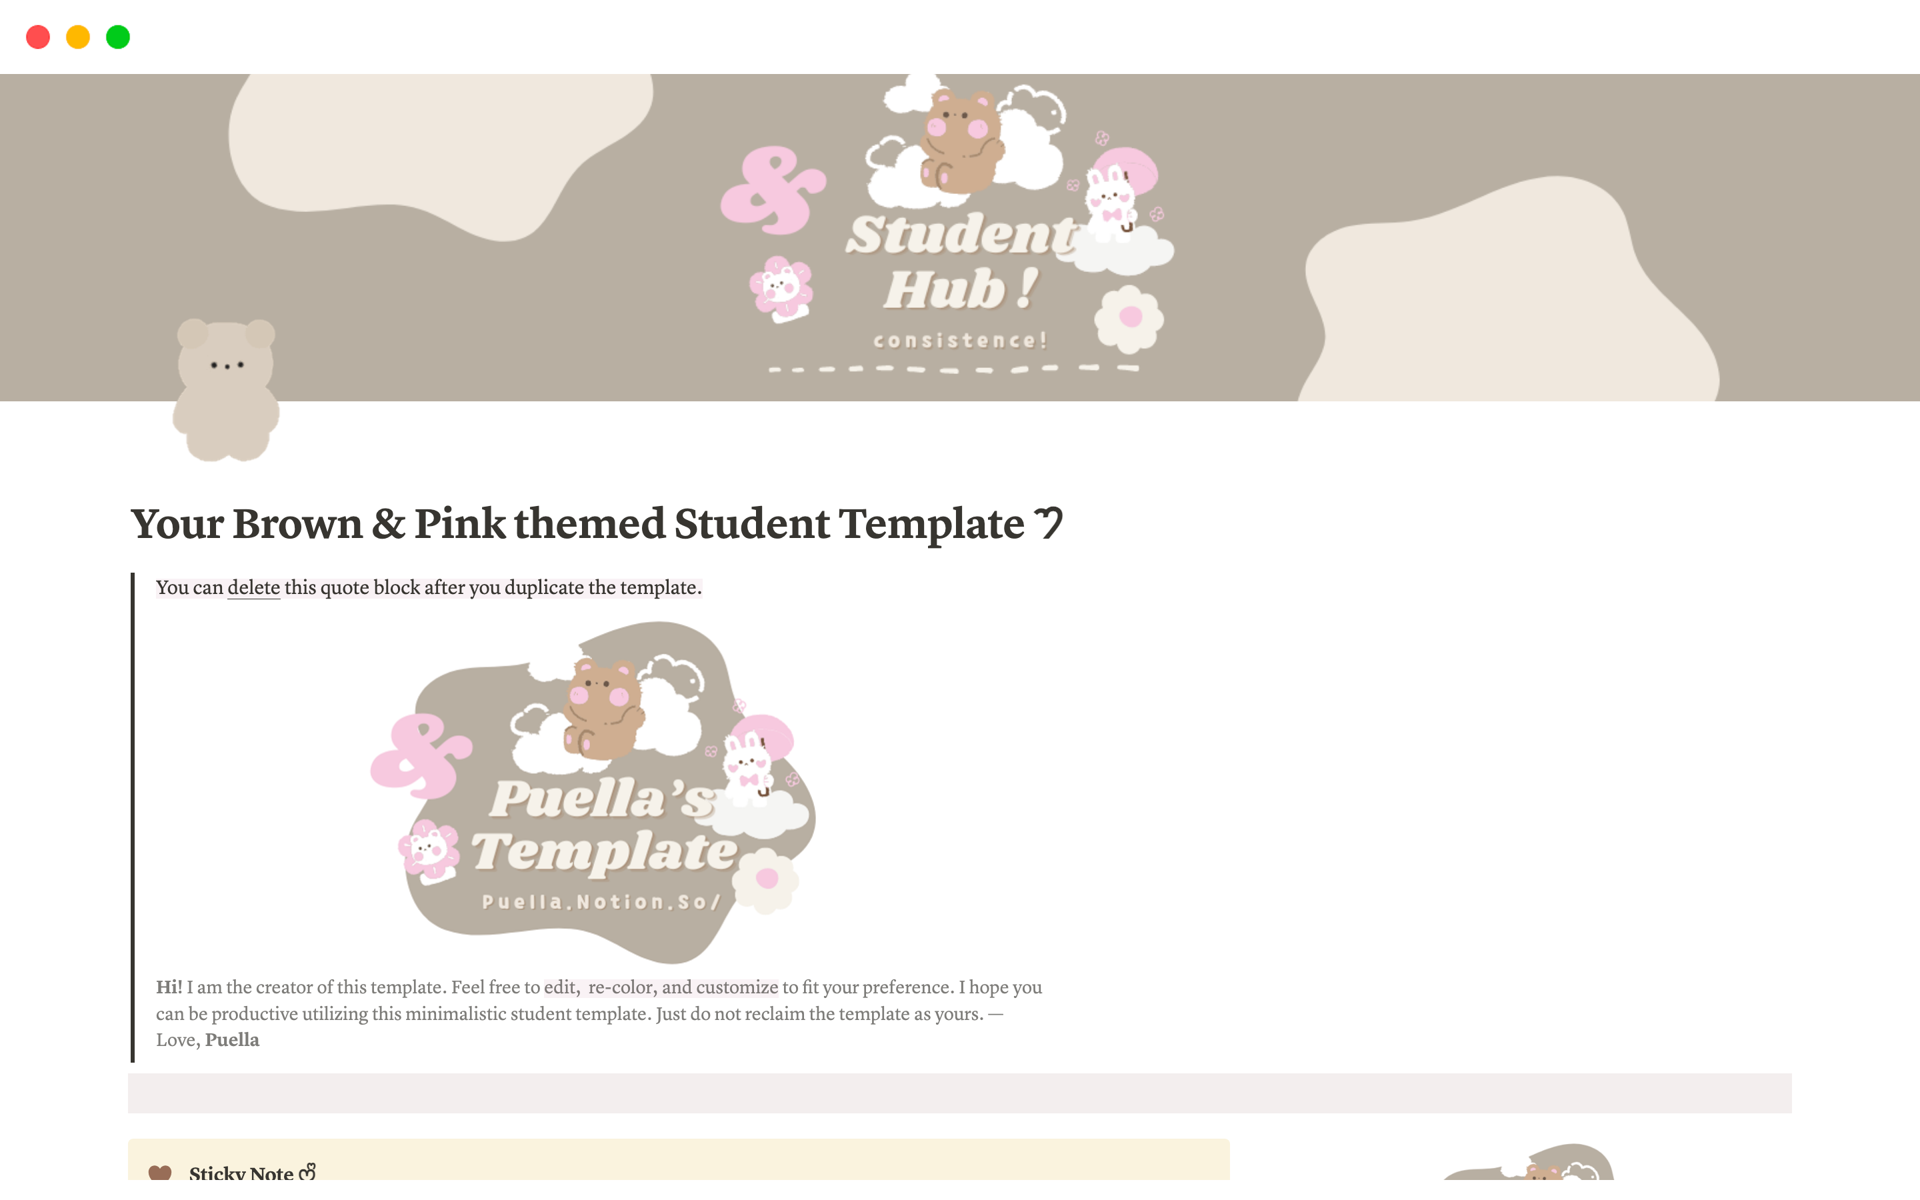 Vista previa de plantilla para Brown & Pink themed Student Template